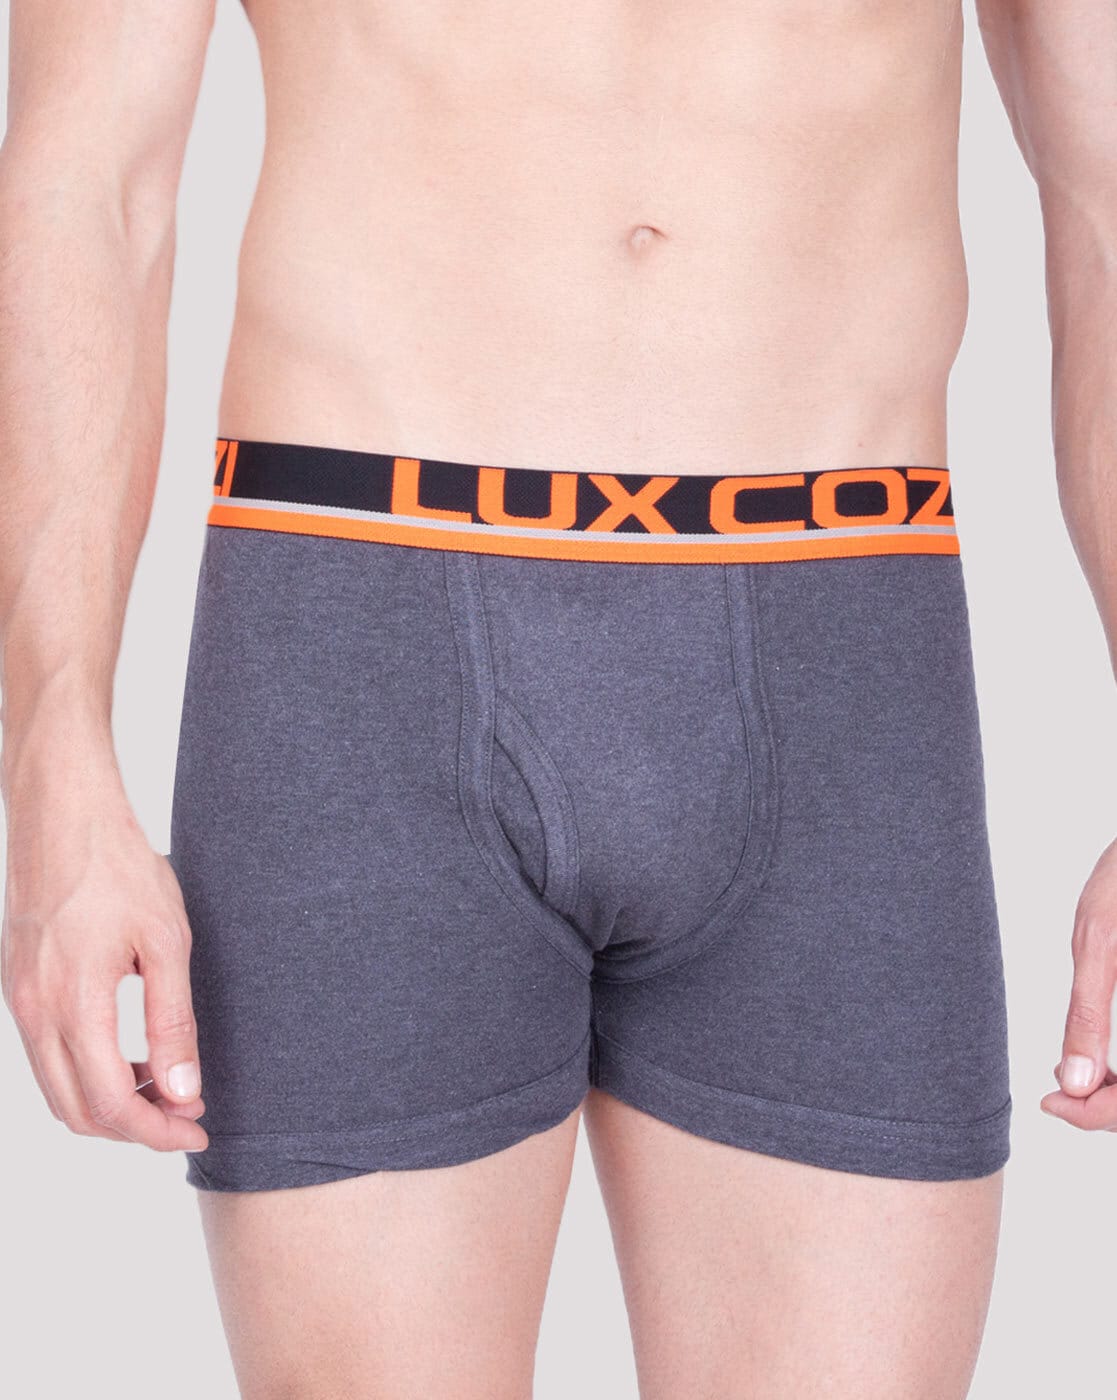 Lux Cozi Underwear Trunk - Buy Lux Cozi Underwear Trunk online in